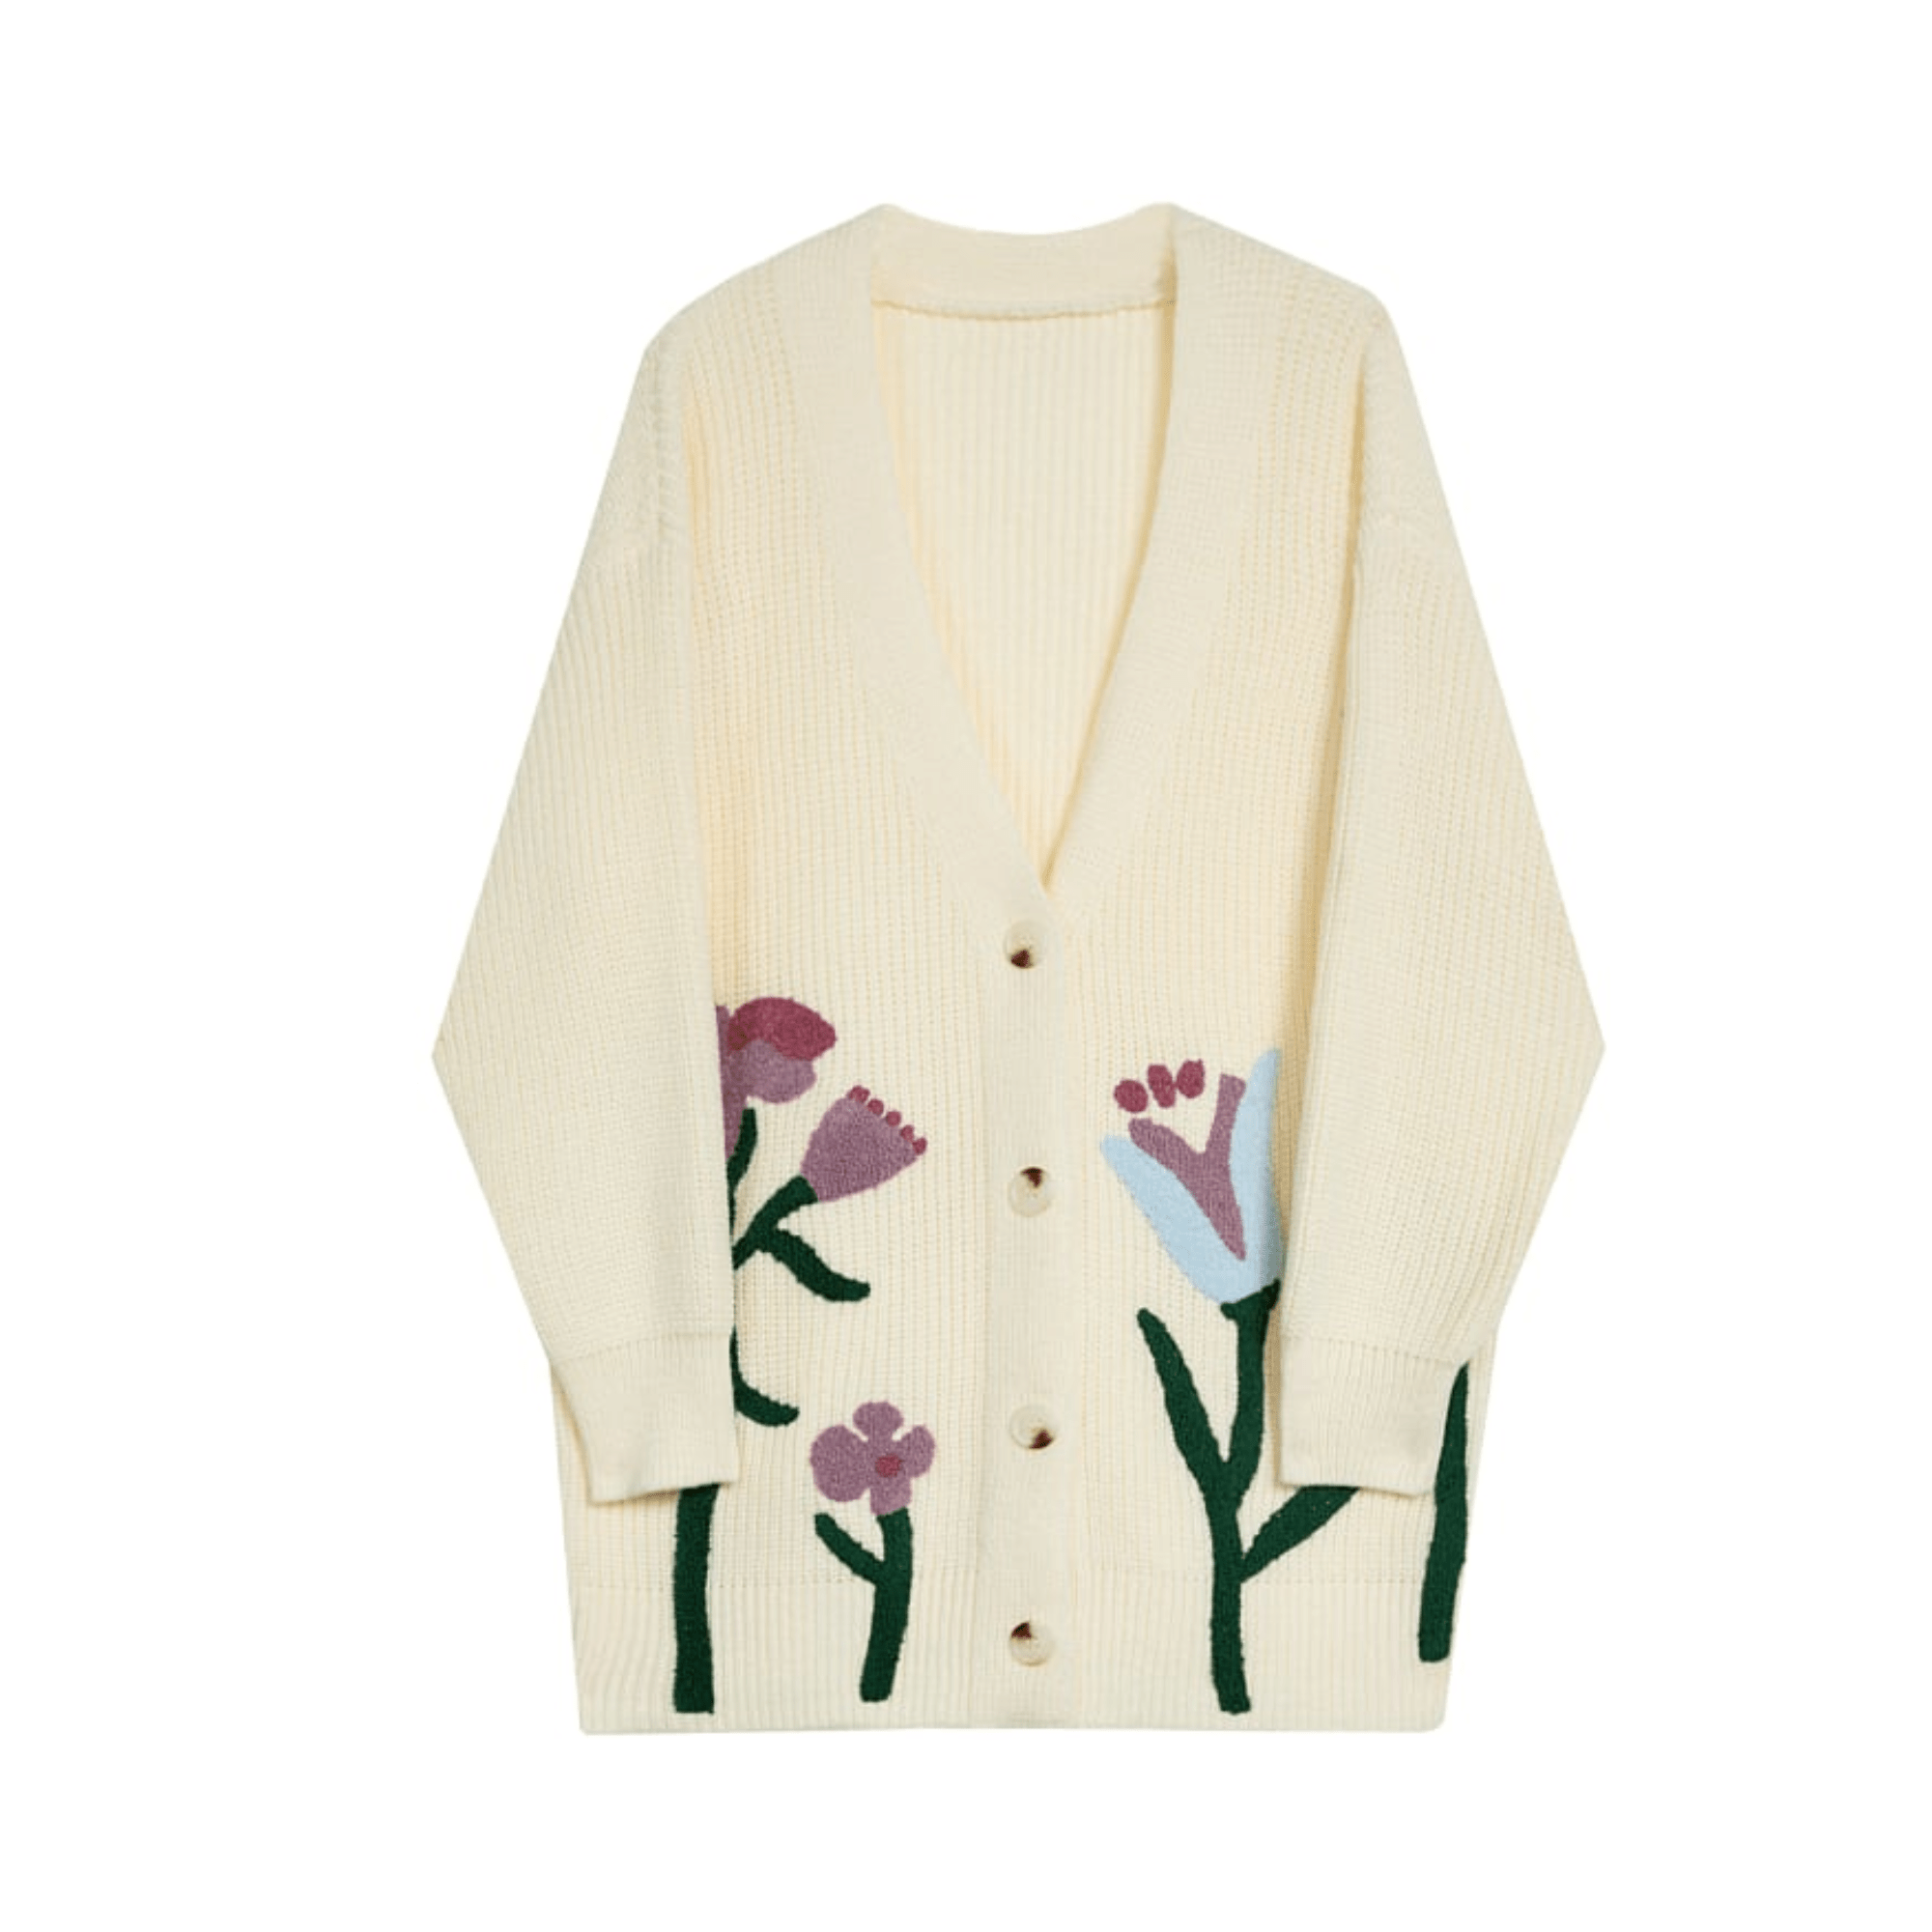 Floral Jacquard Knit Cardigan - Kelly Obi New York